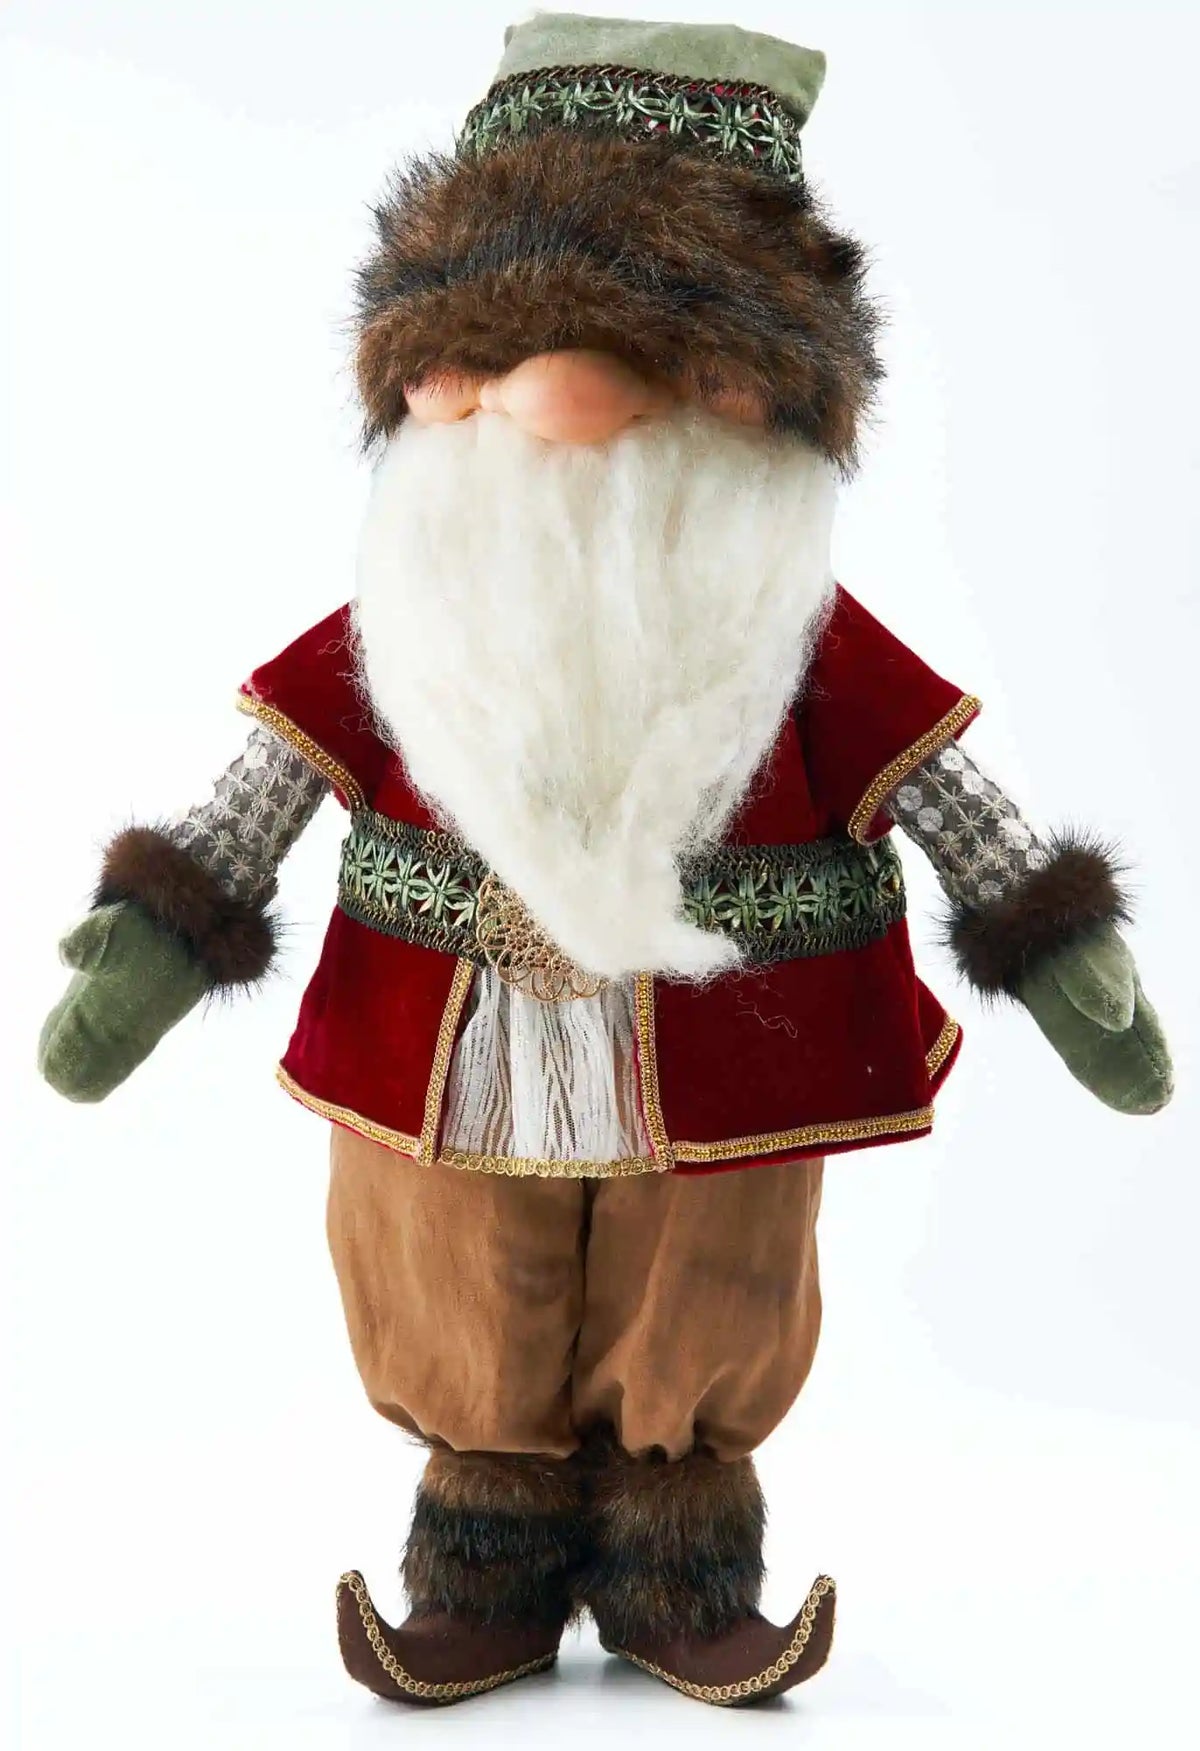 Gnorbitt Gnome Doll